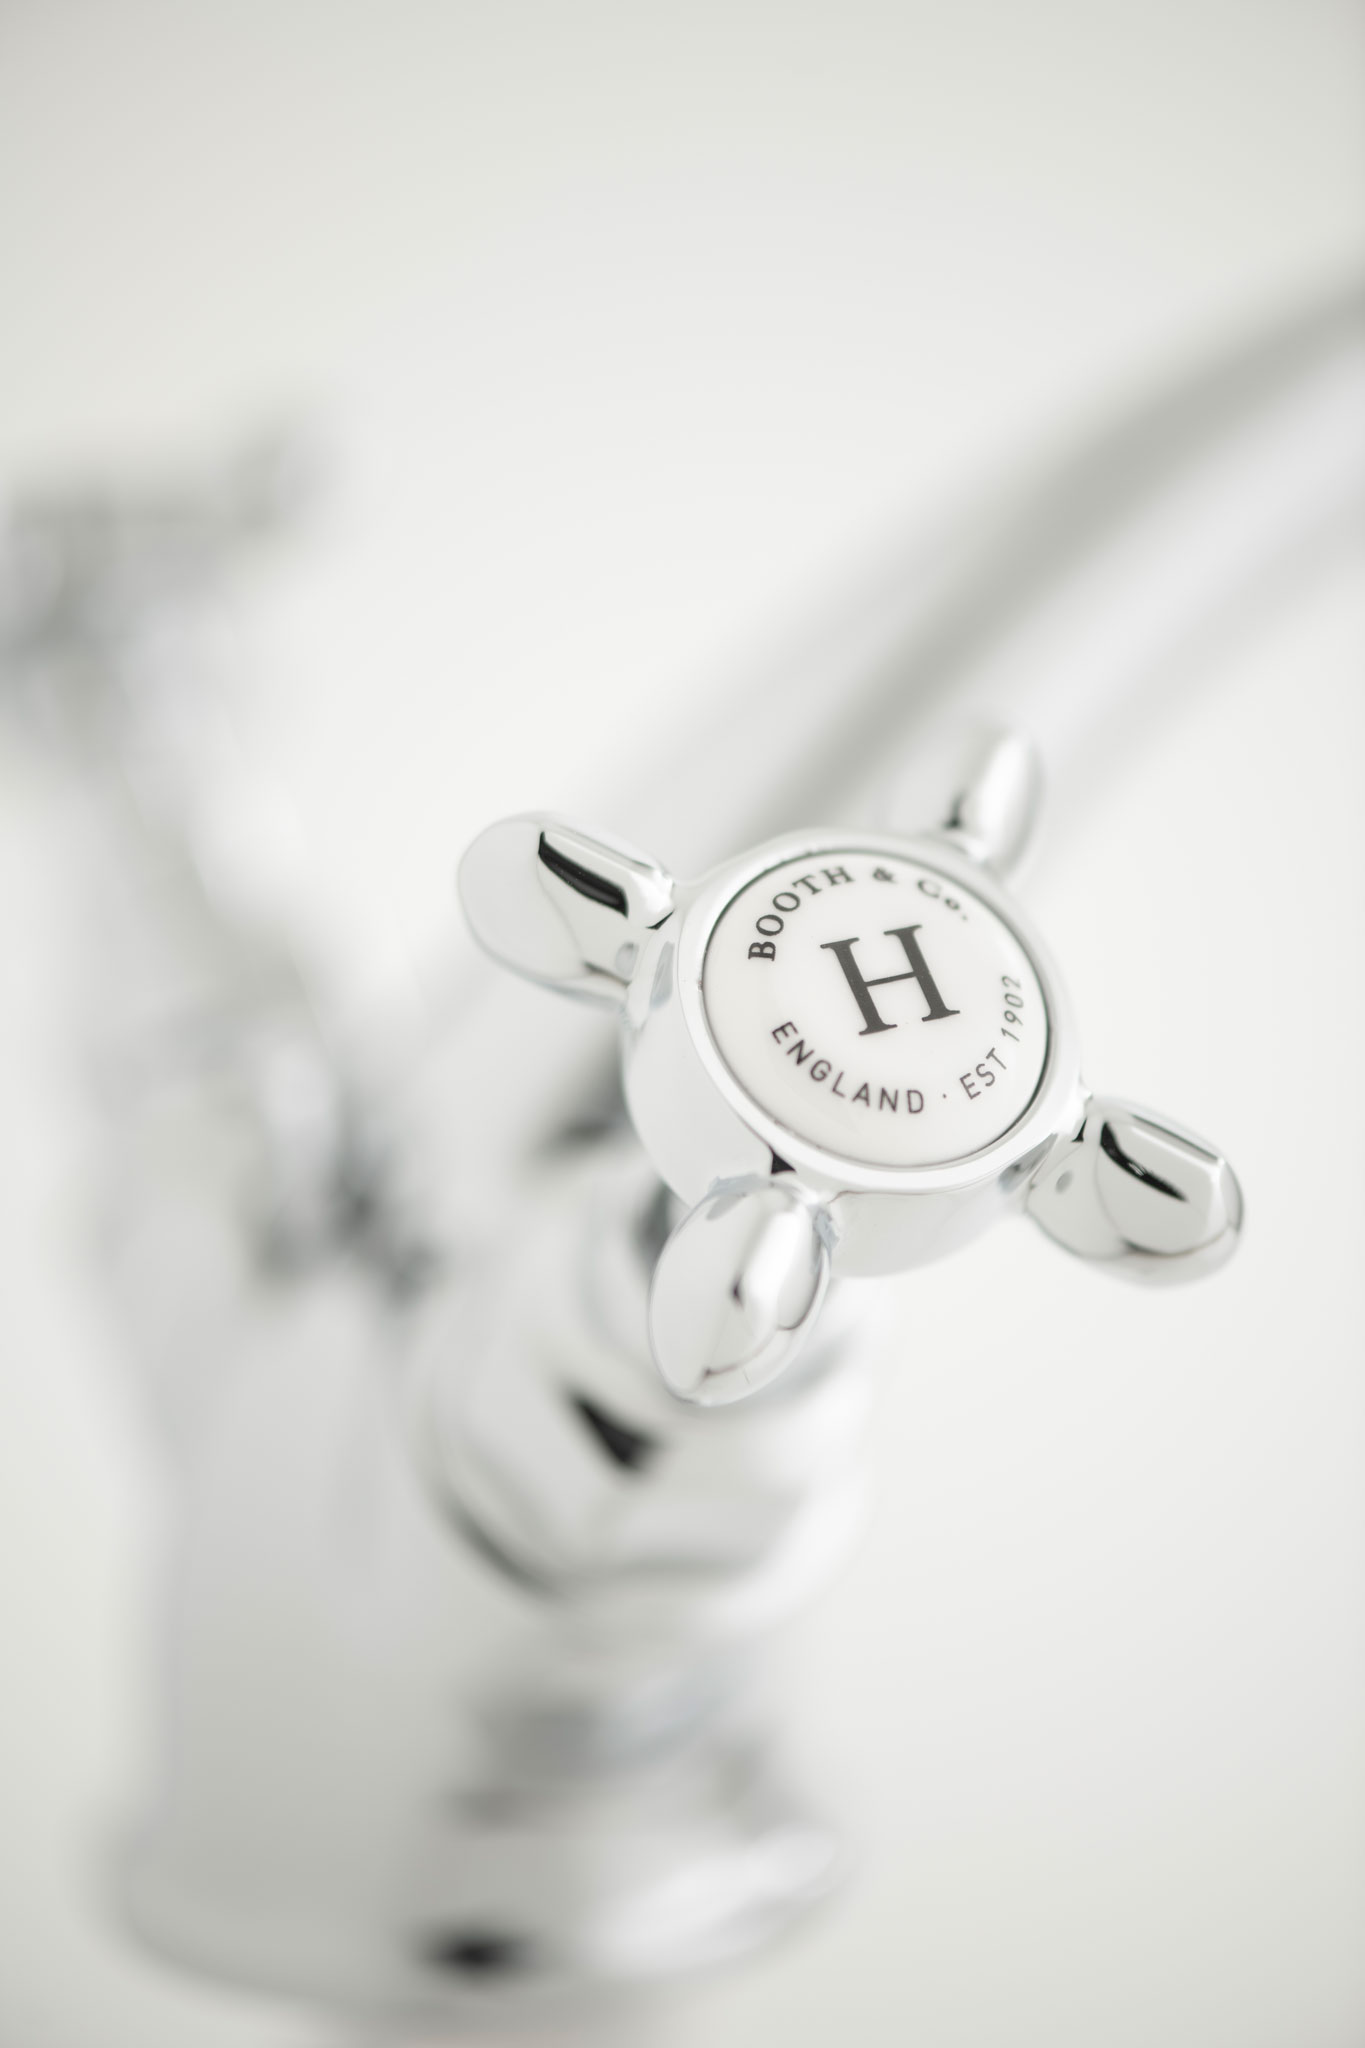 Traditional basin mixer hot handle close up